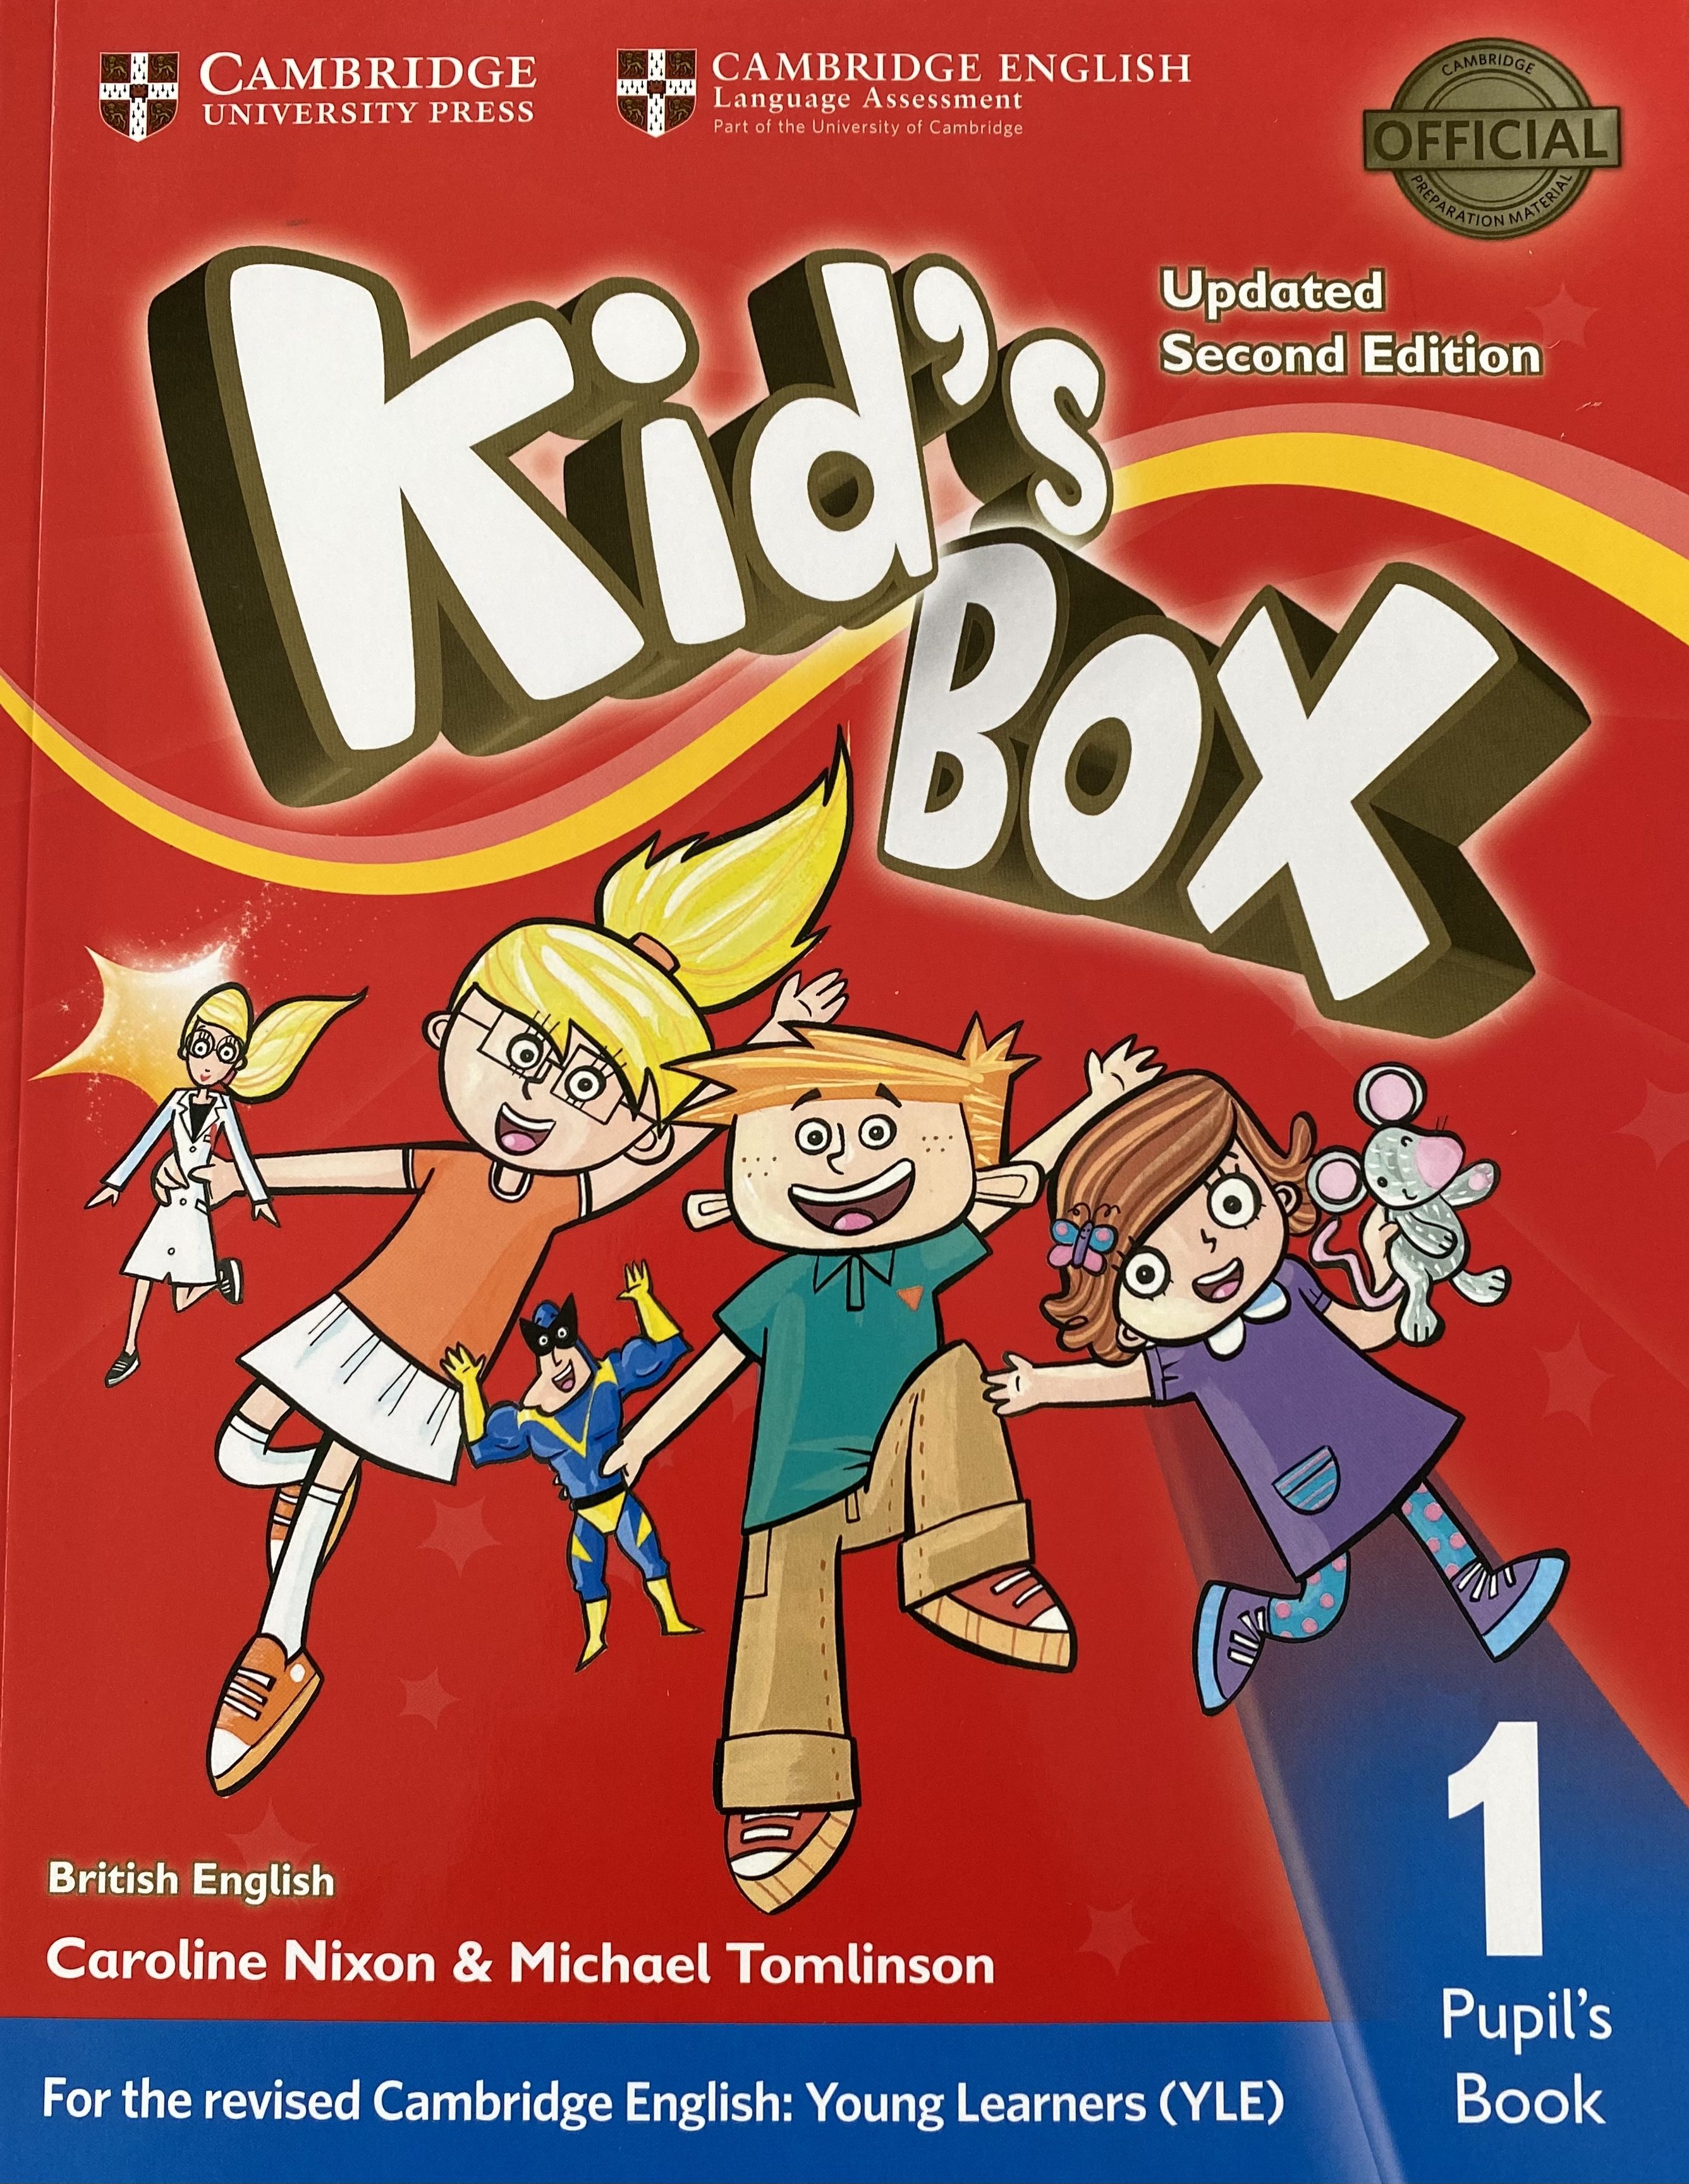 Wordwall kids box starter. Kids Box 1 pupil's book. Kid's Box (2nd Edition) Starter. Nixon, Tomlinson: Kid’s Box Upd 2ed PB 1. Kids Box 2 second Edition.